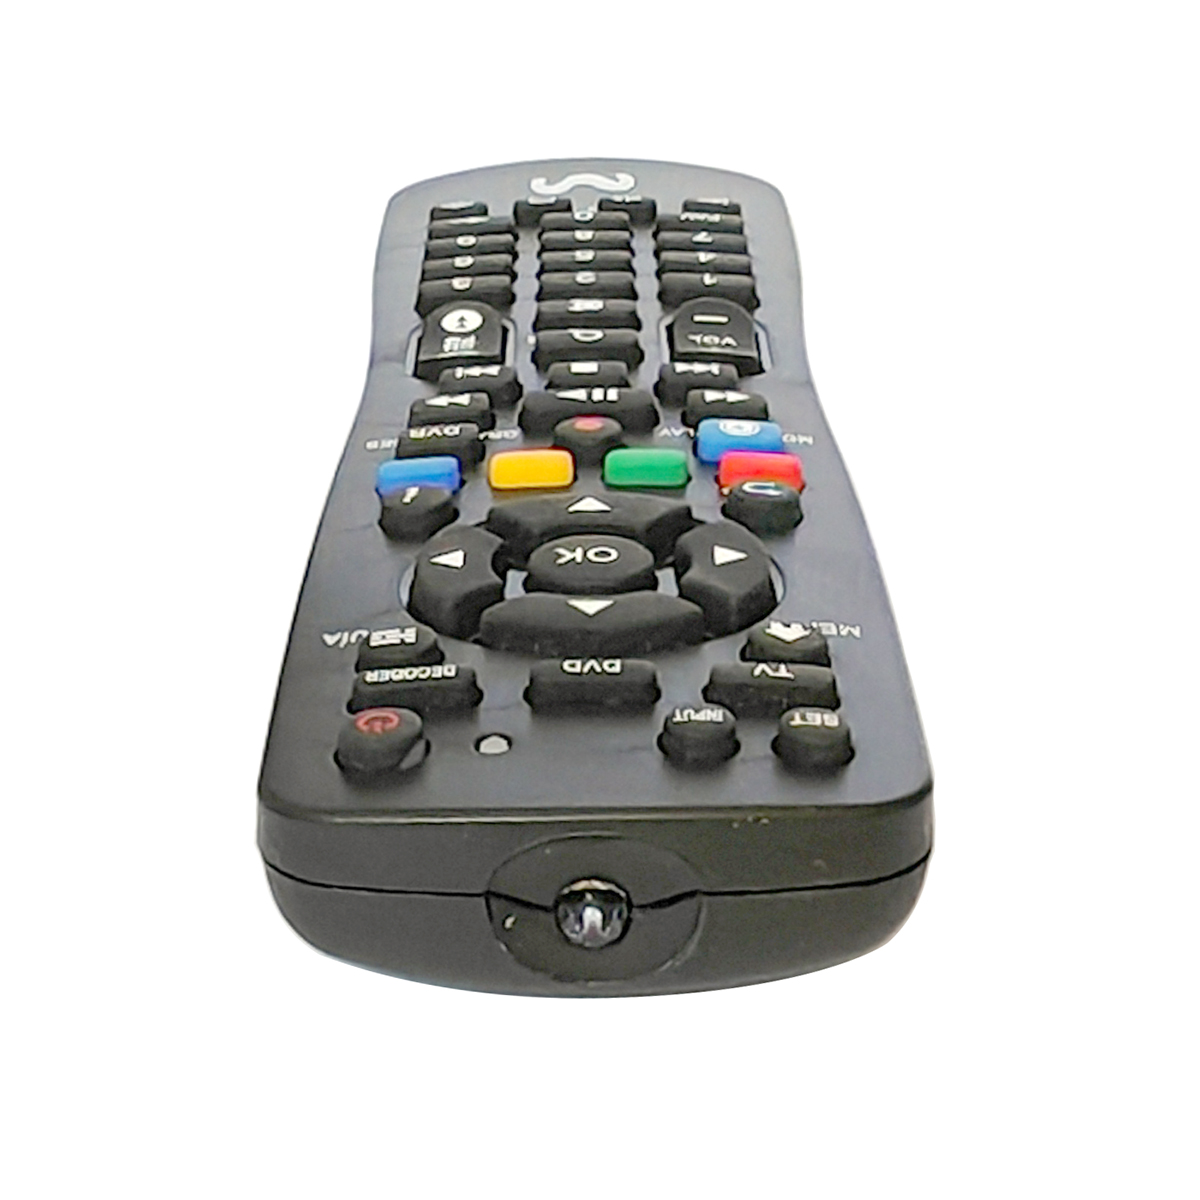 2023 New Model Remote Control For TV (M230608)